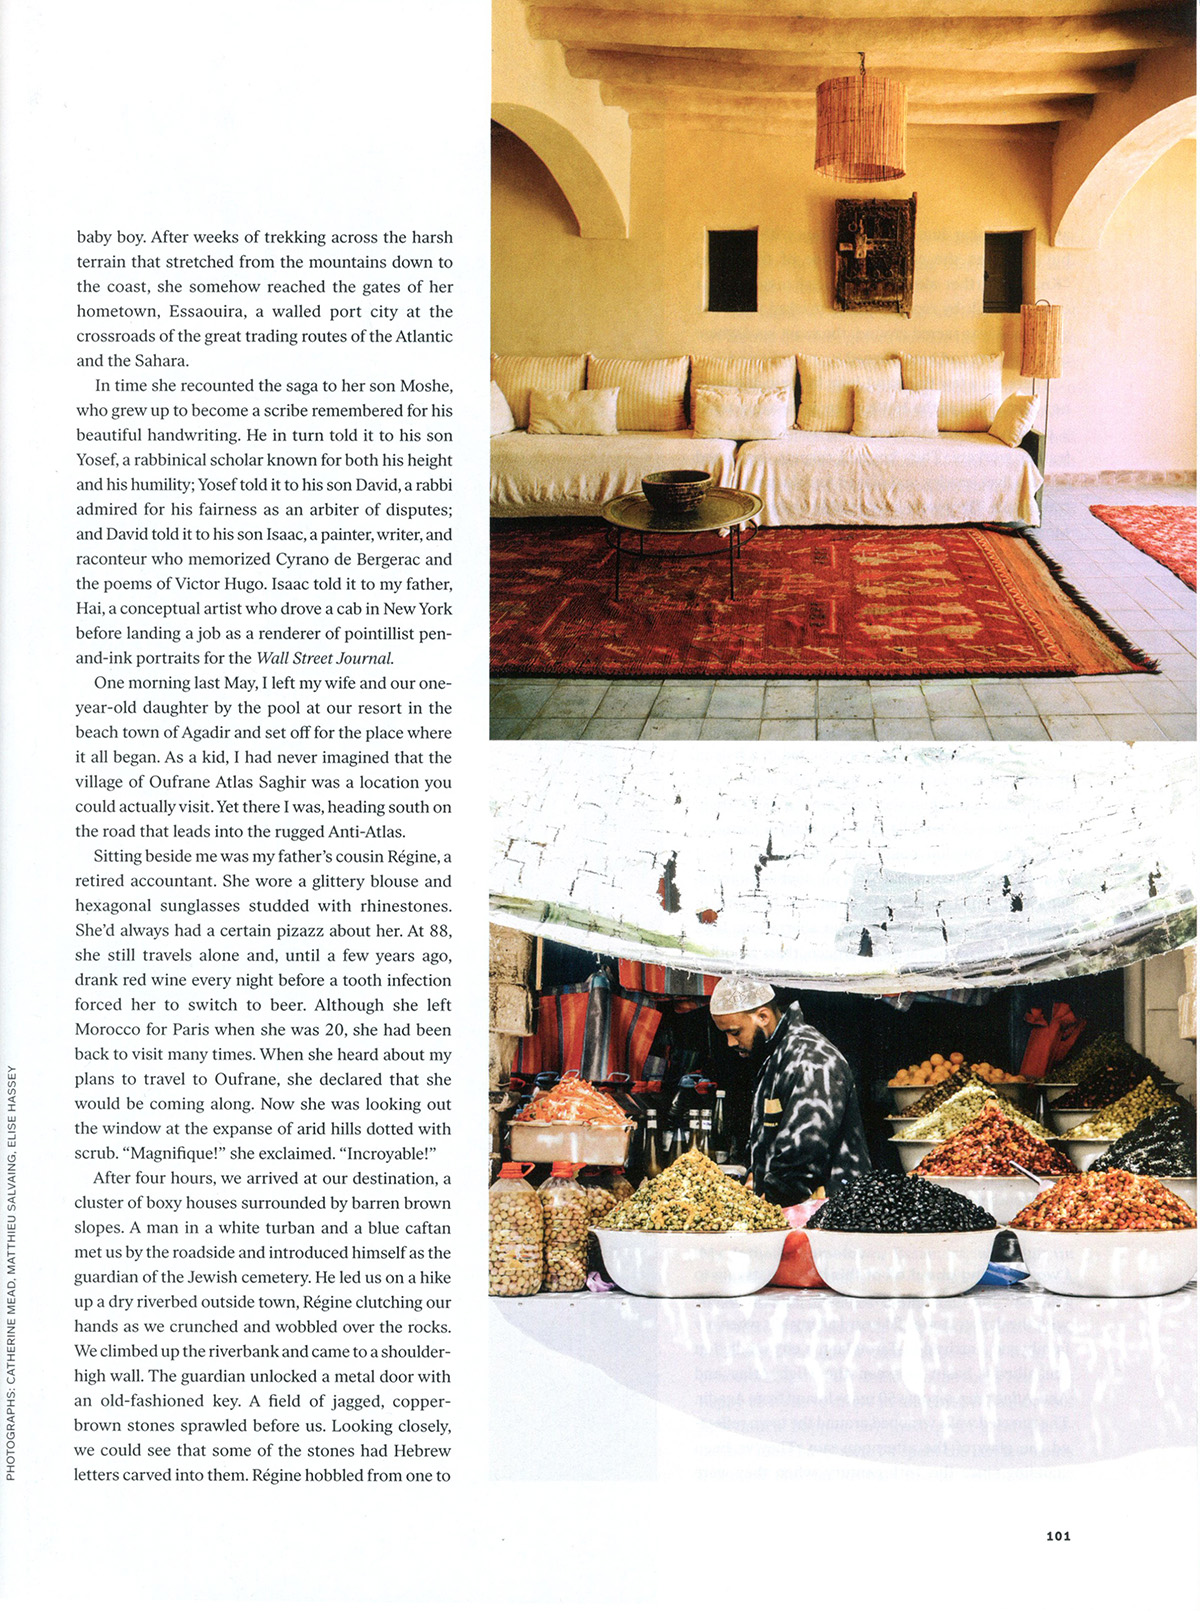 Conde Nast Traveler Artisans of Leisure private luxury Morocco tours